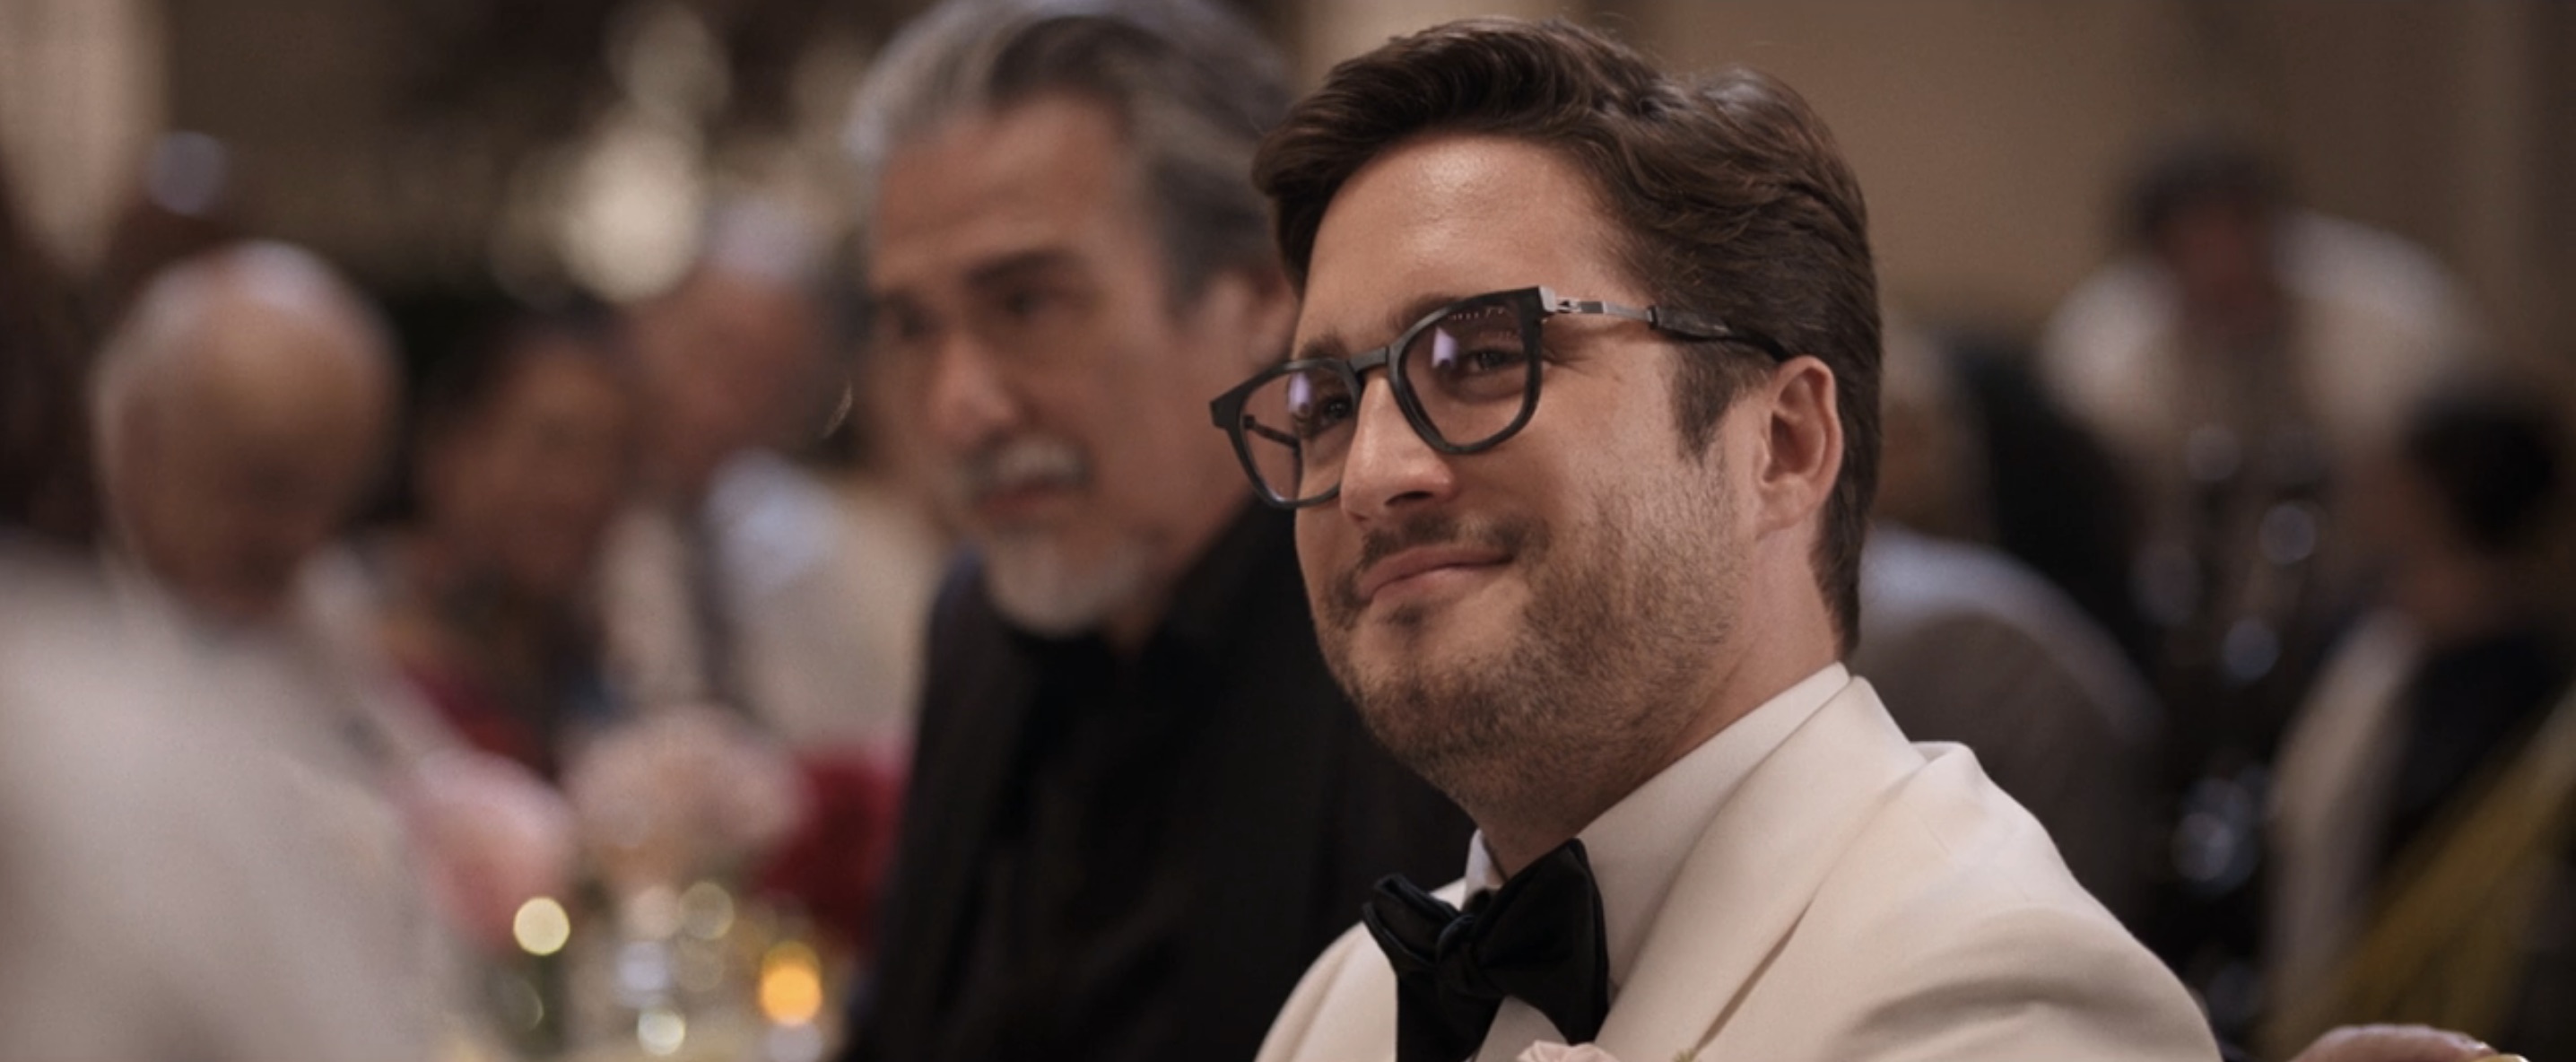 Father of the Bride Cast on HBO Max - Diego Boneta as Adan Castillo